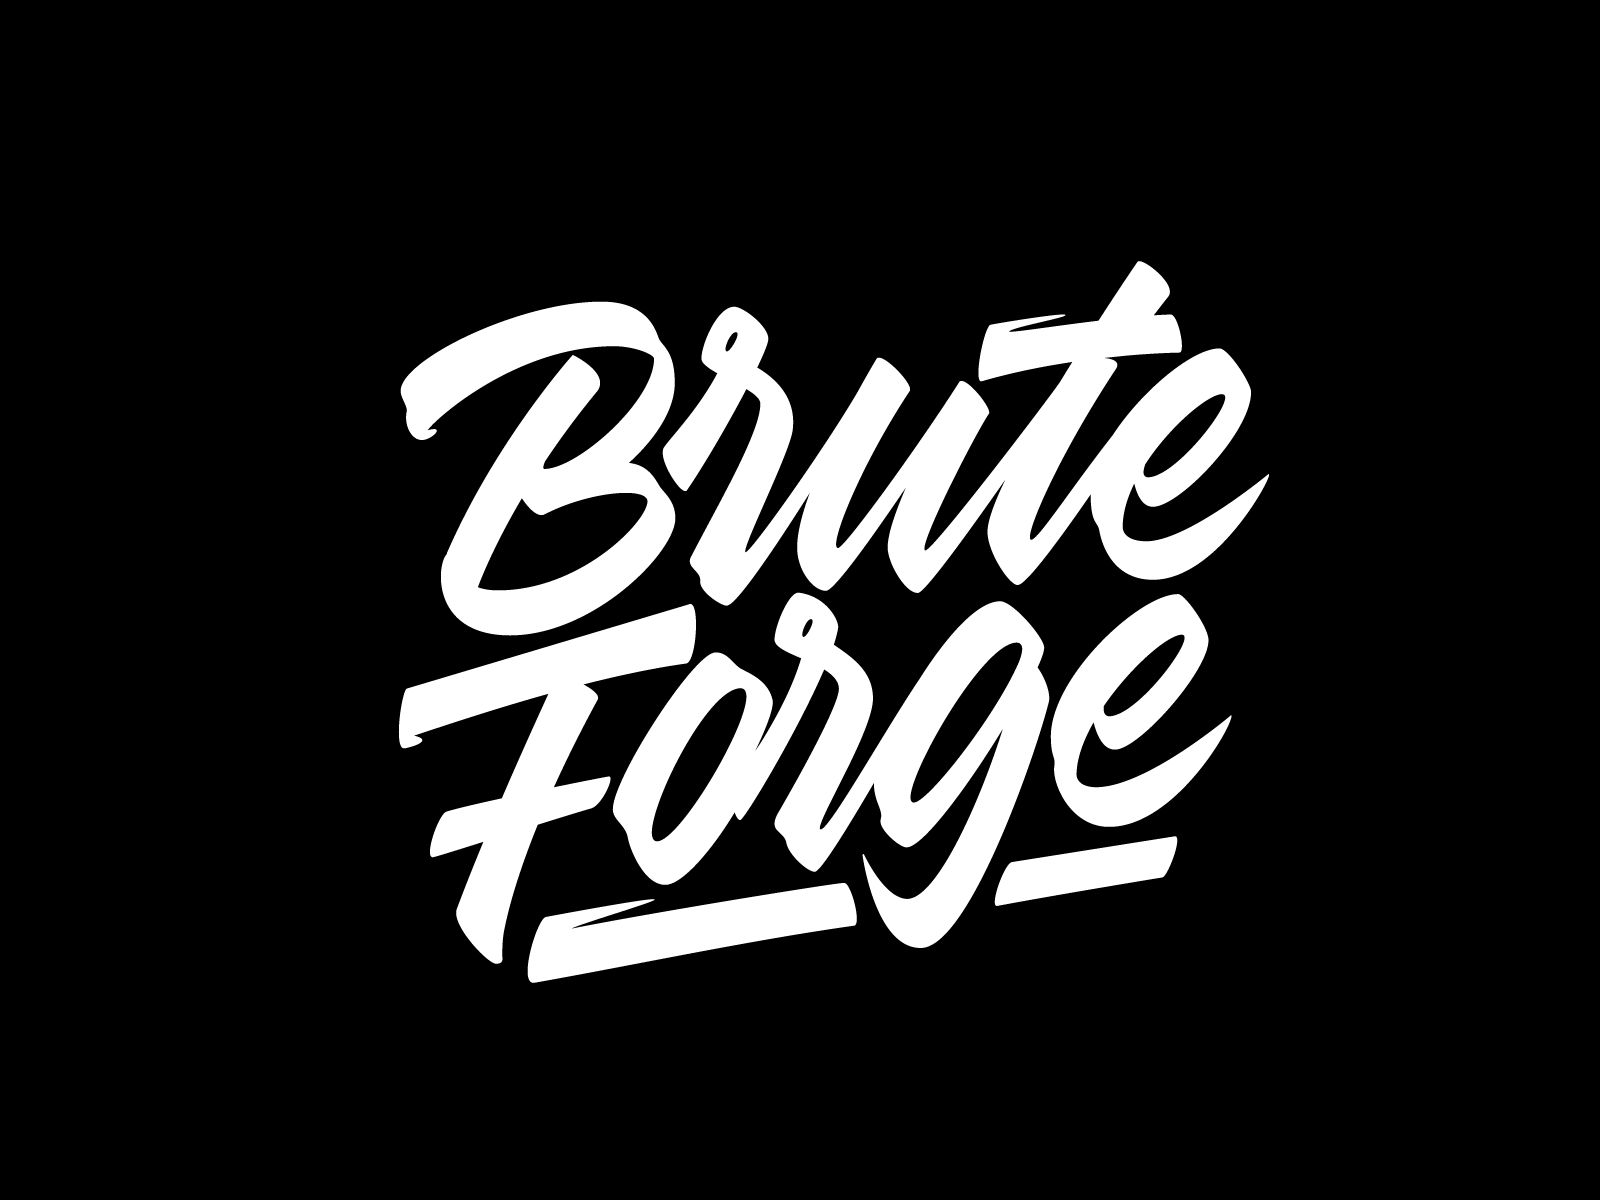 Brute Forge by Sasha Cko on Dribbble